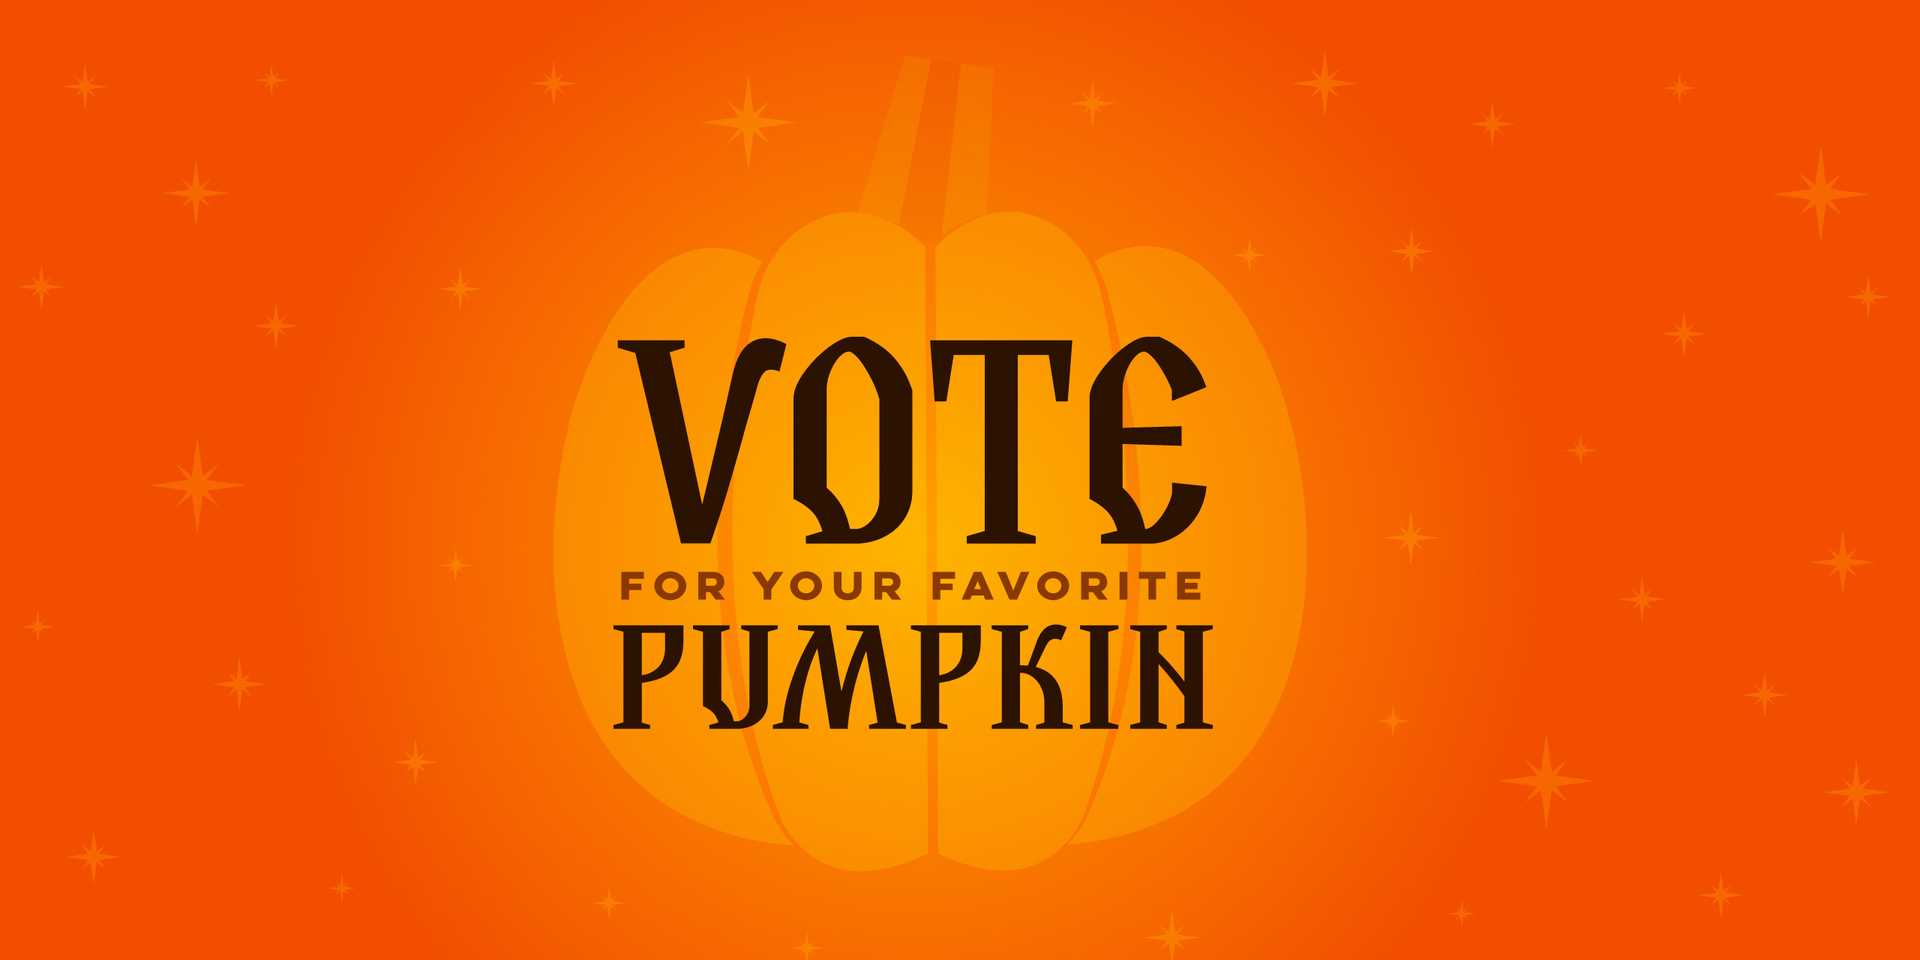 Vote for your favorite pumpkin